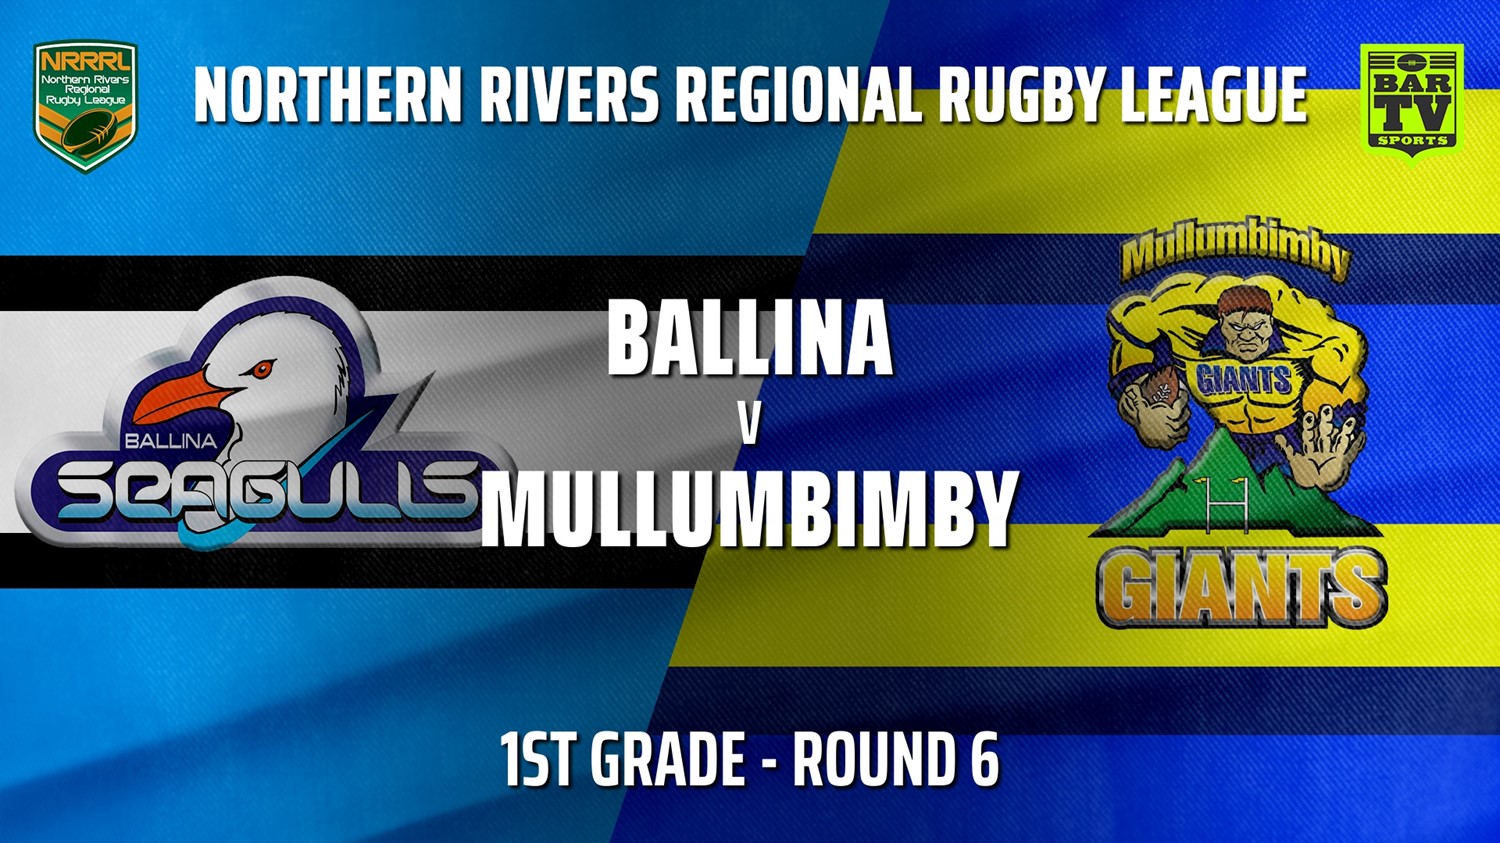 210606-NRRRL Round 6 - 1st Grade - Ballina Seagulls v Mullumbimby Giants Minigame Slate Image